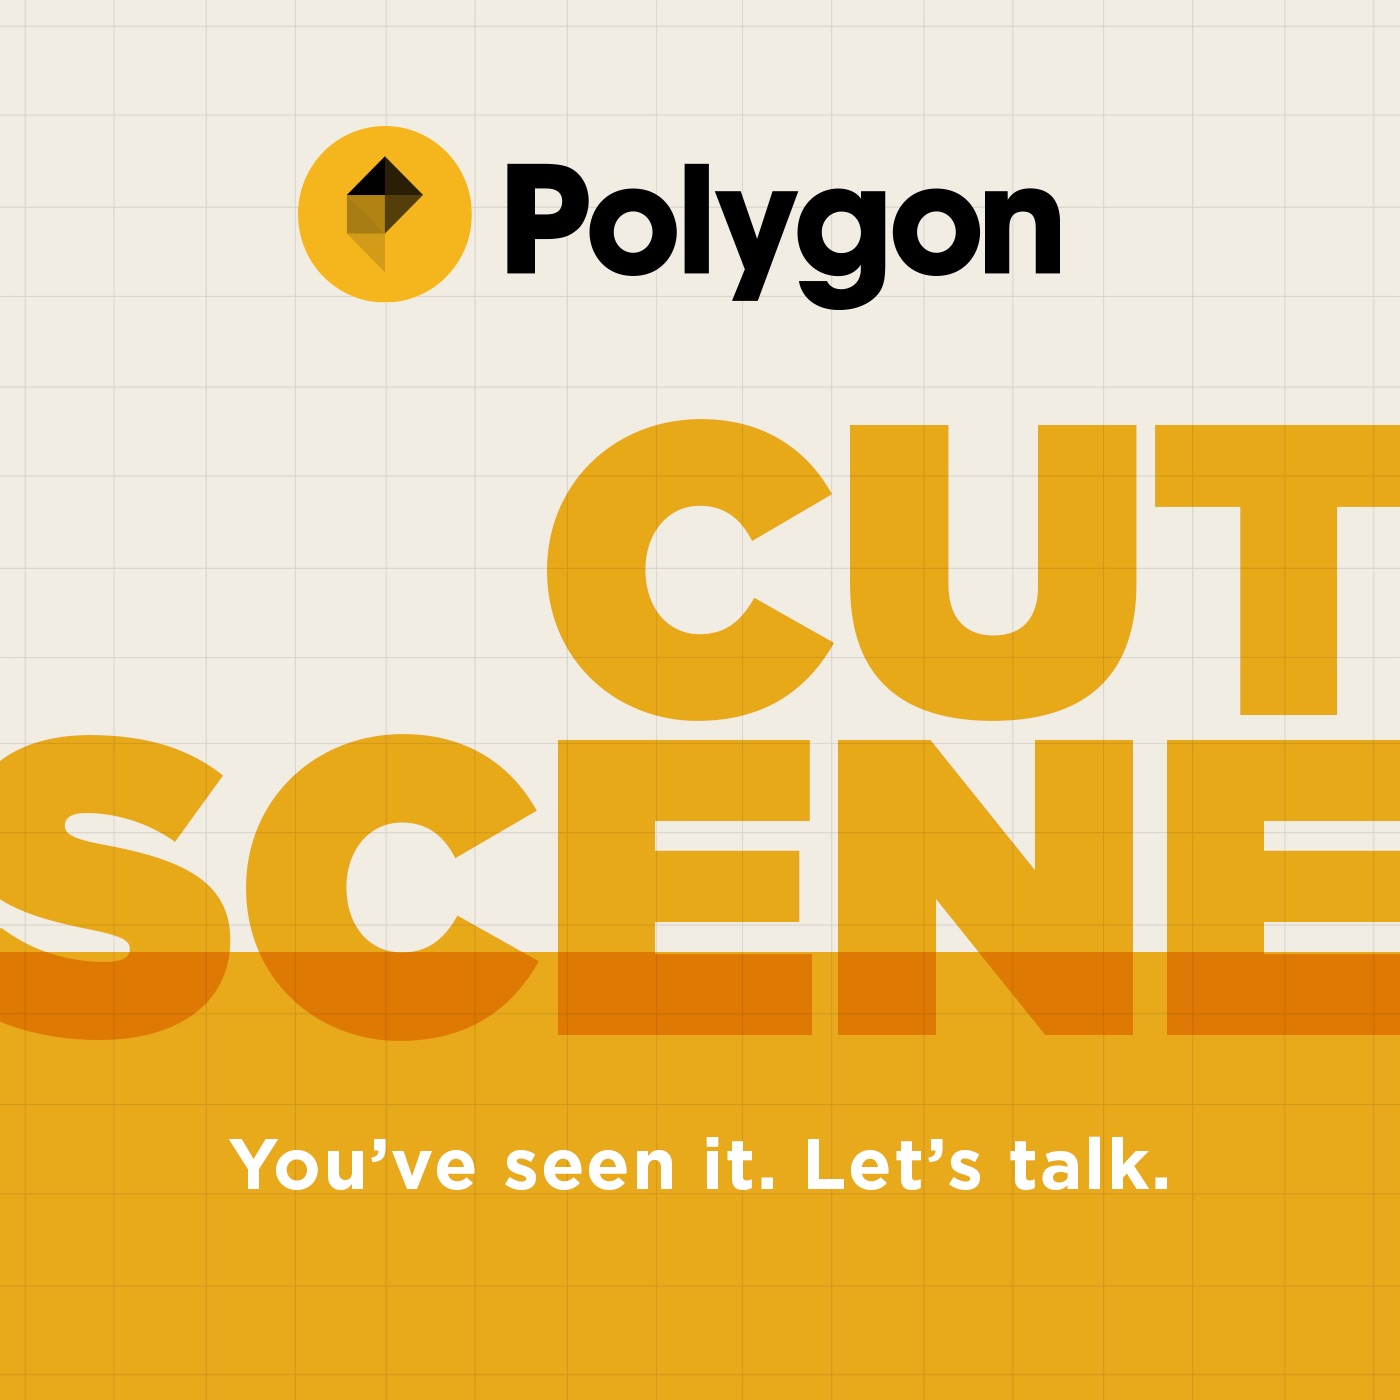 Polygon Cutscene